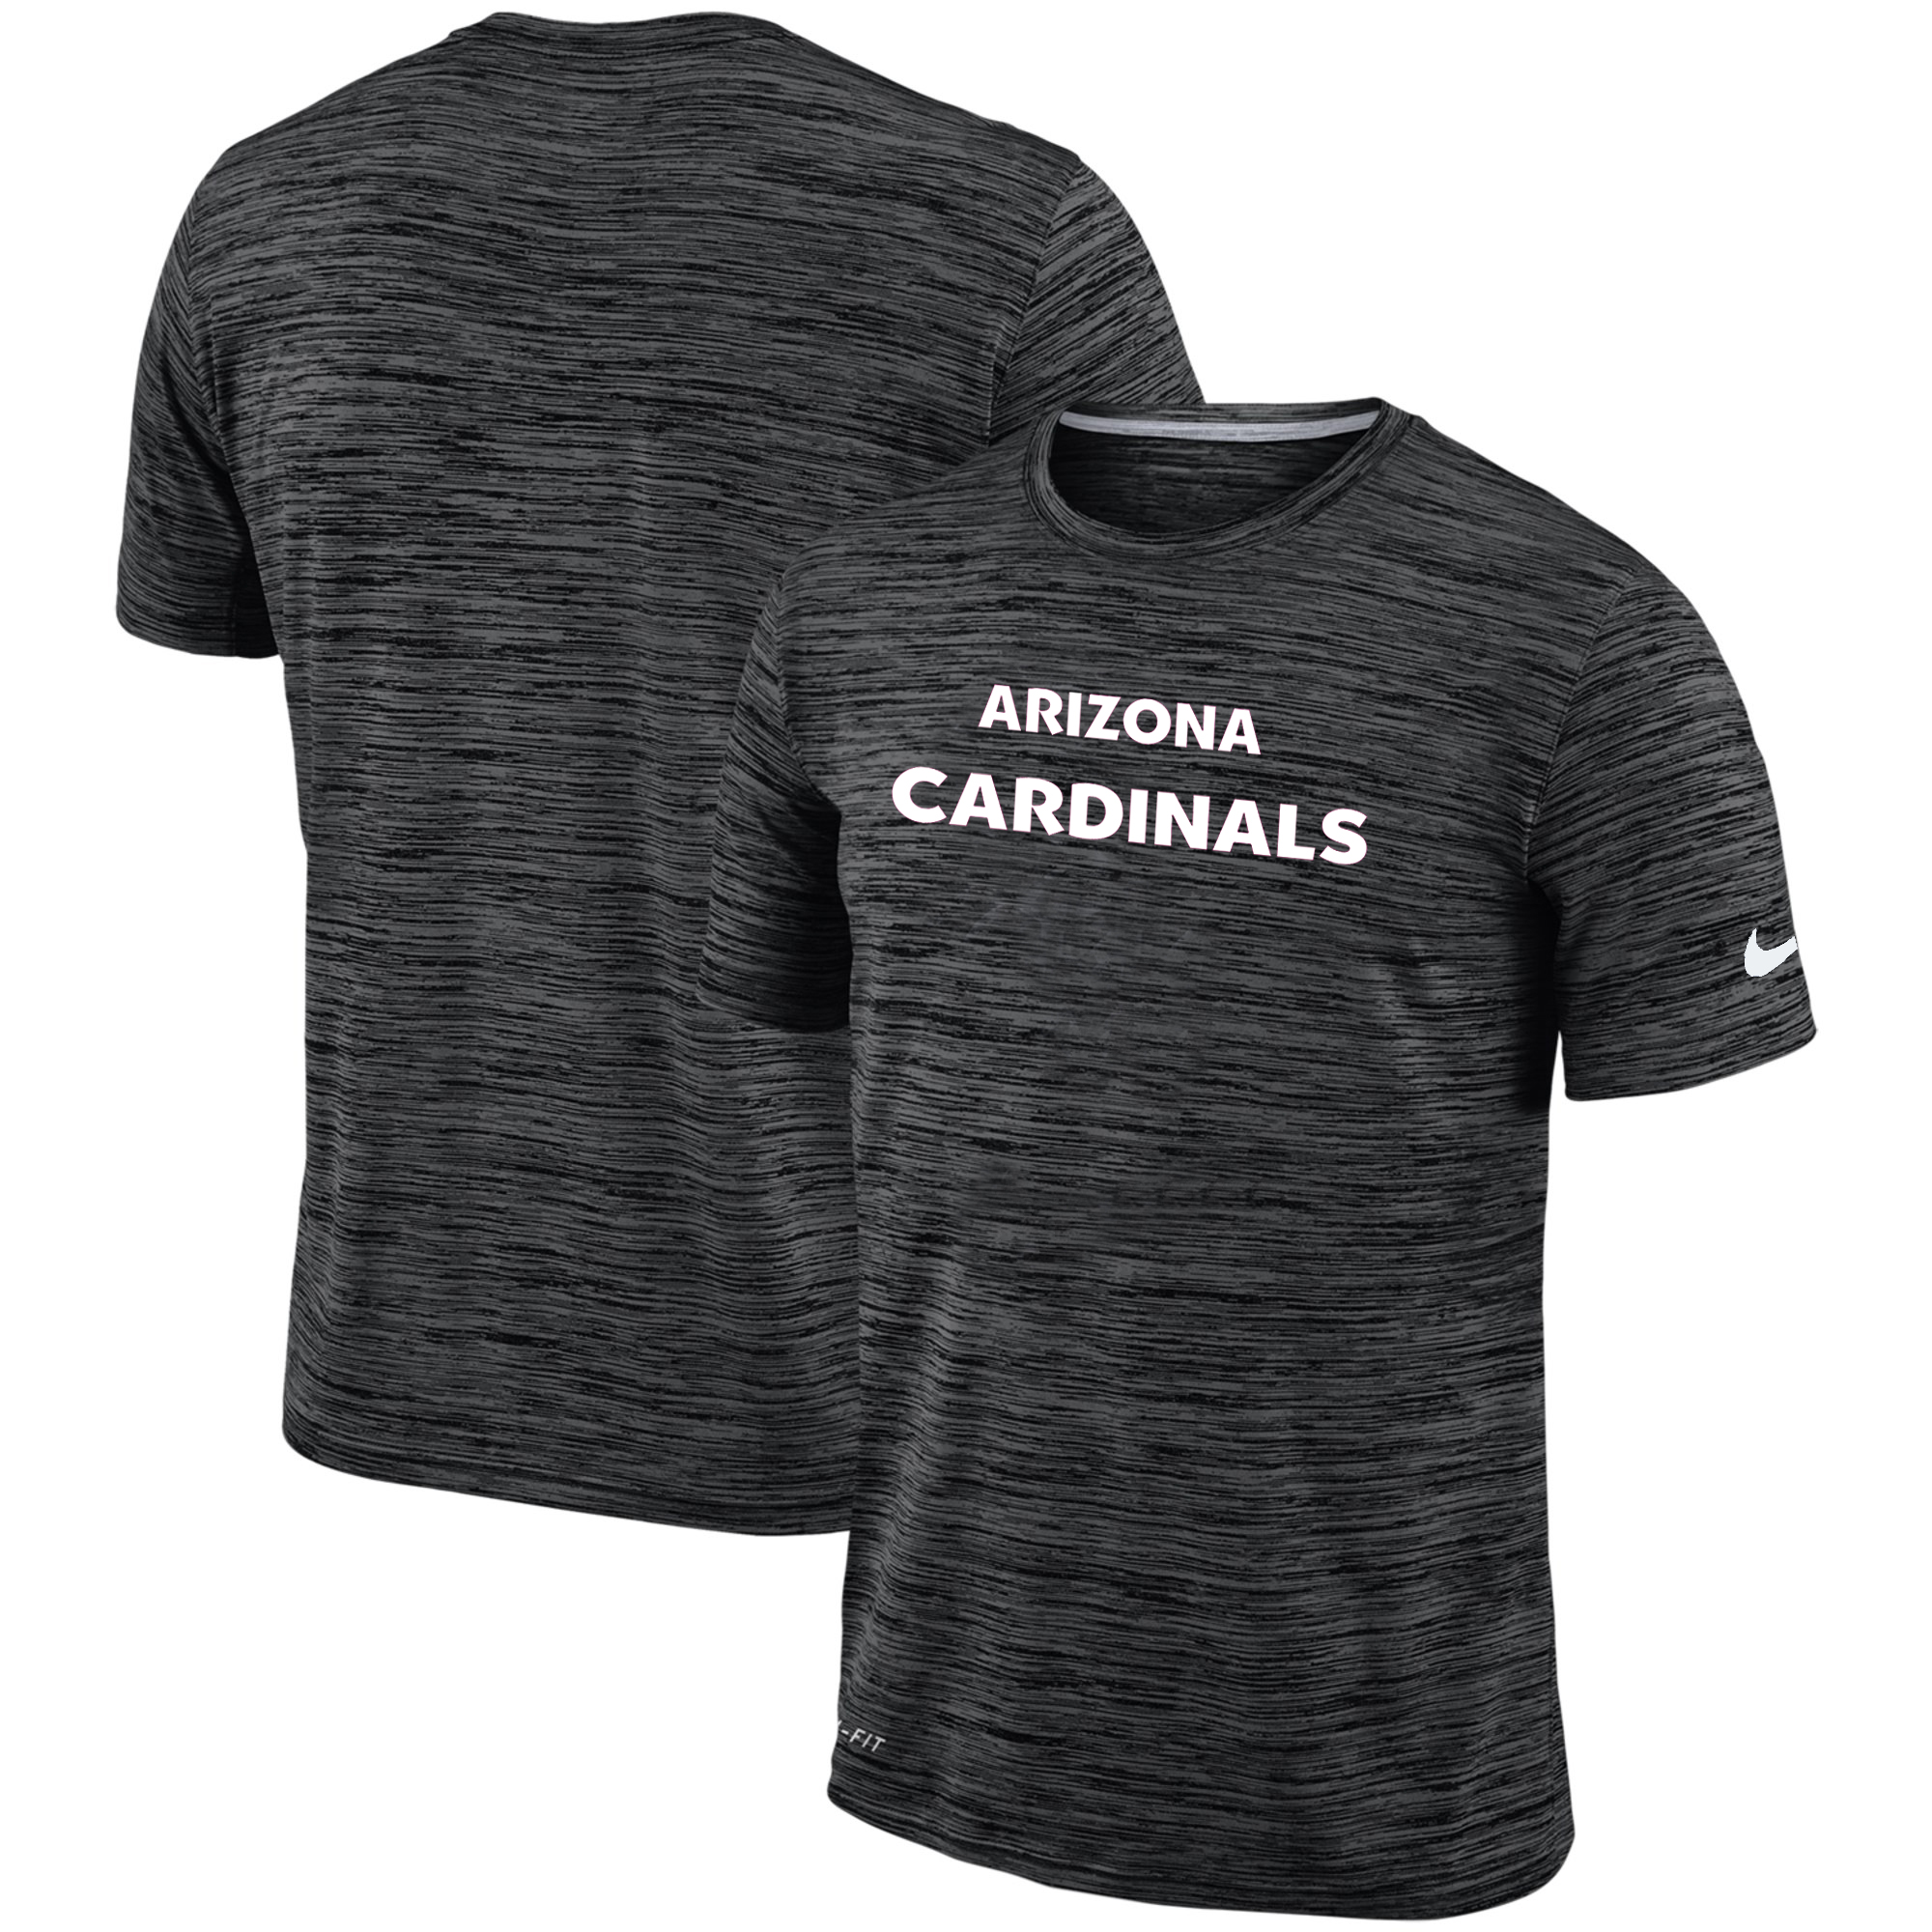 Men's Arizona Cardinals Nike Black Velocity Performance T-Shirt